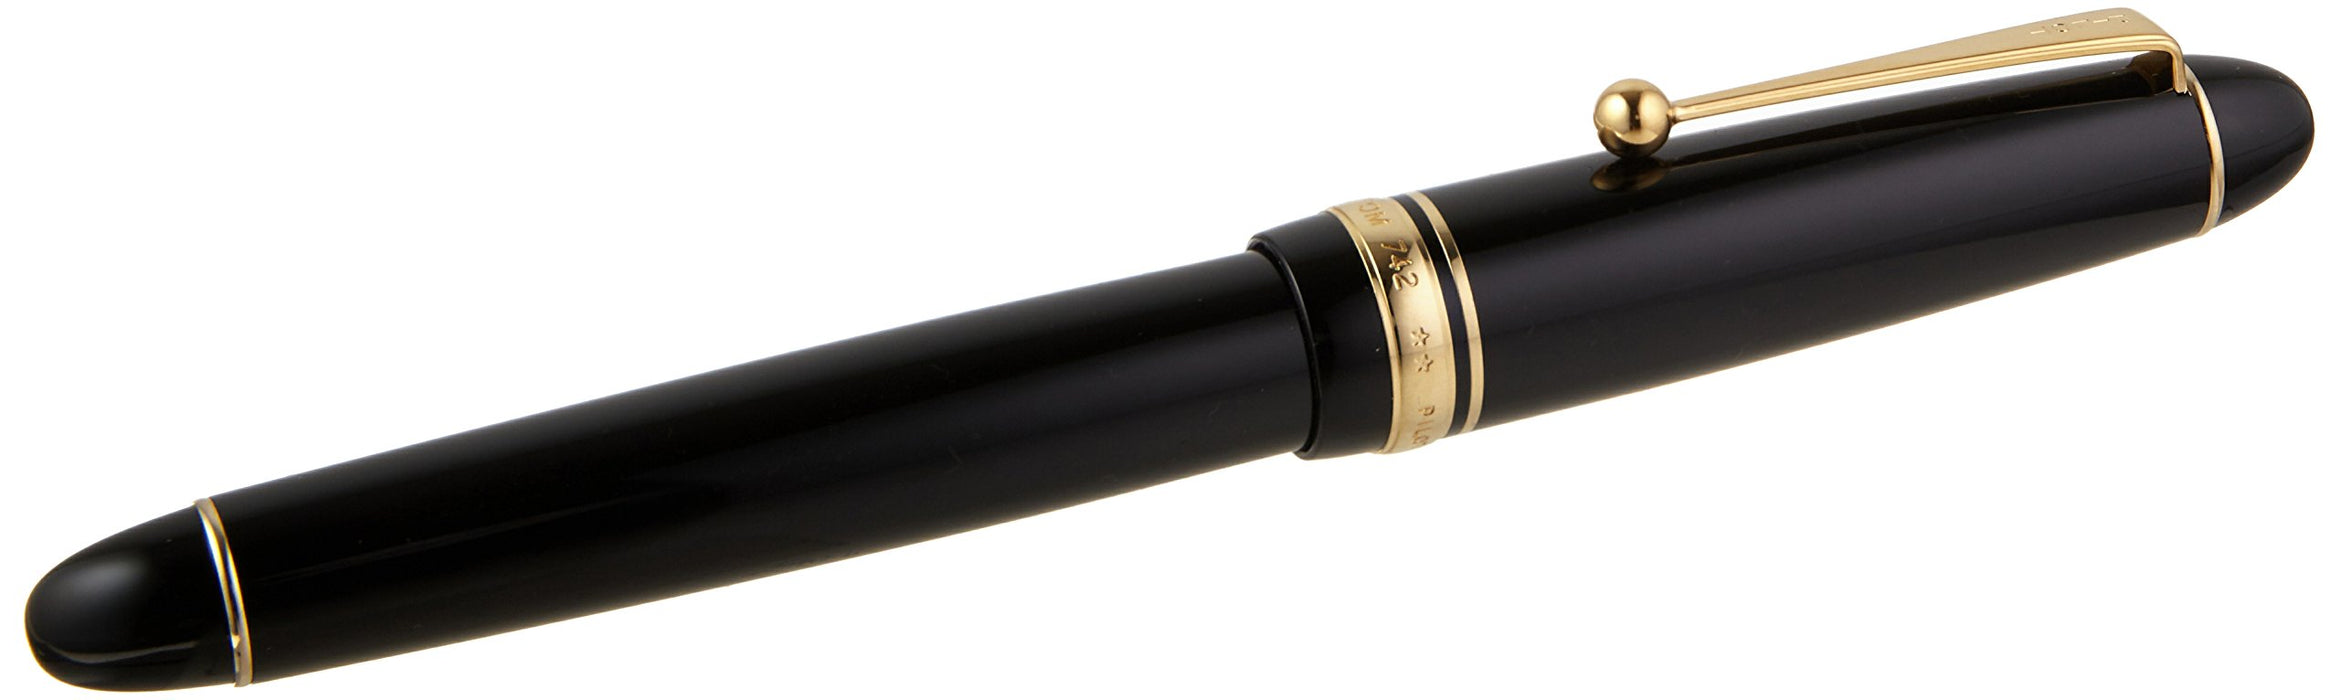 Pilot Black Axis Fountain Pen Custom 742 Course C Model - FKK2000RBC